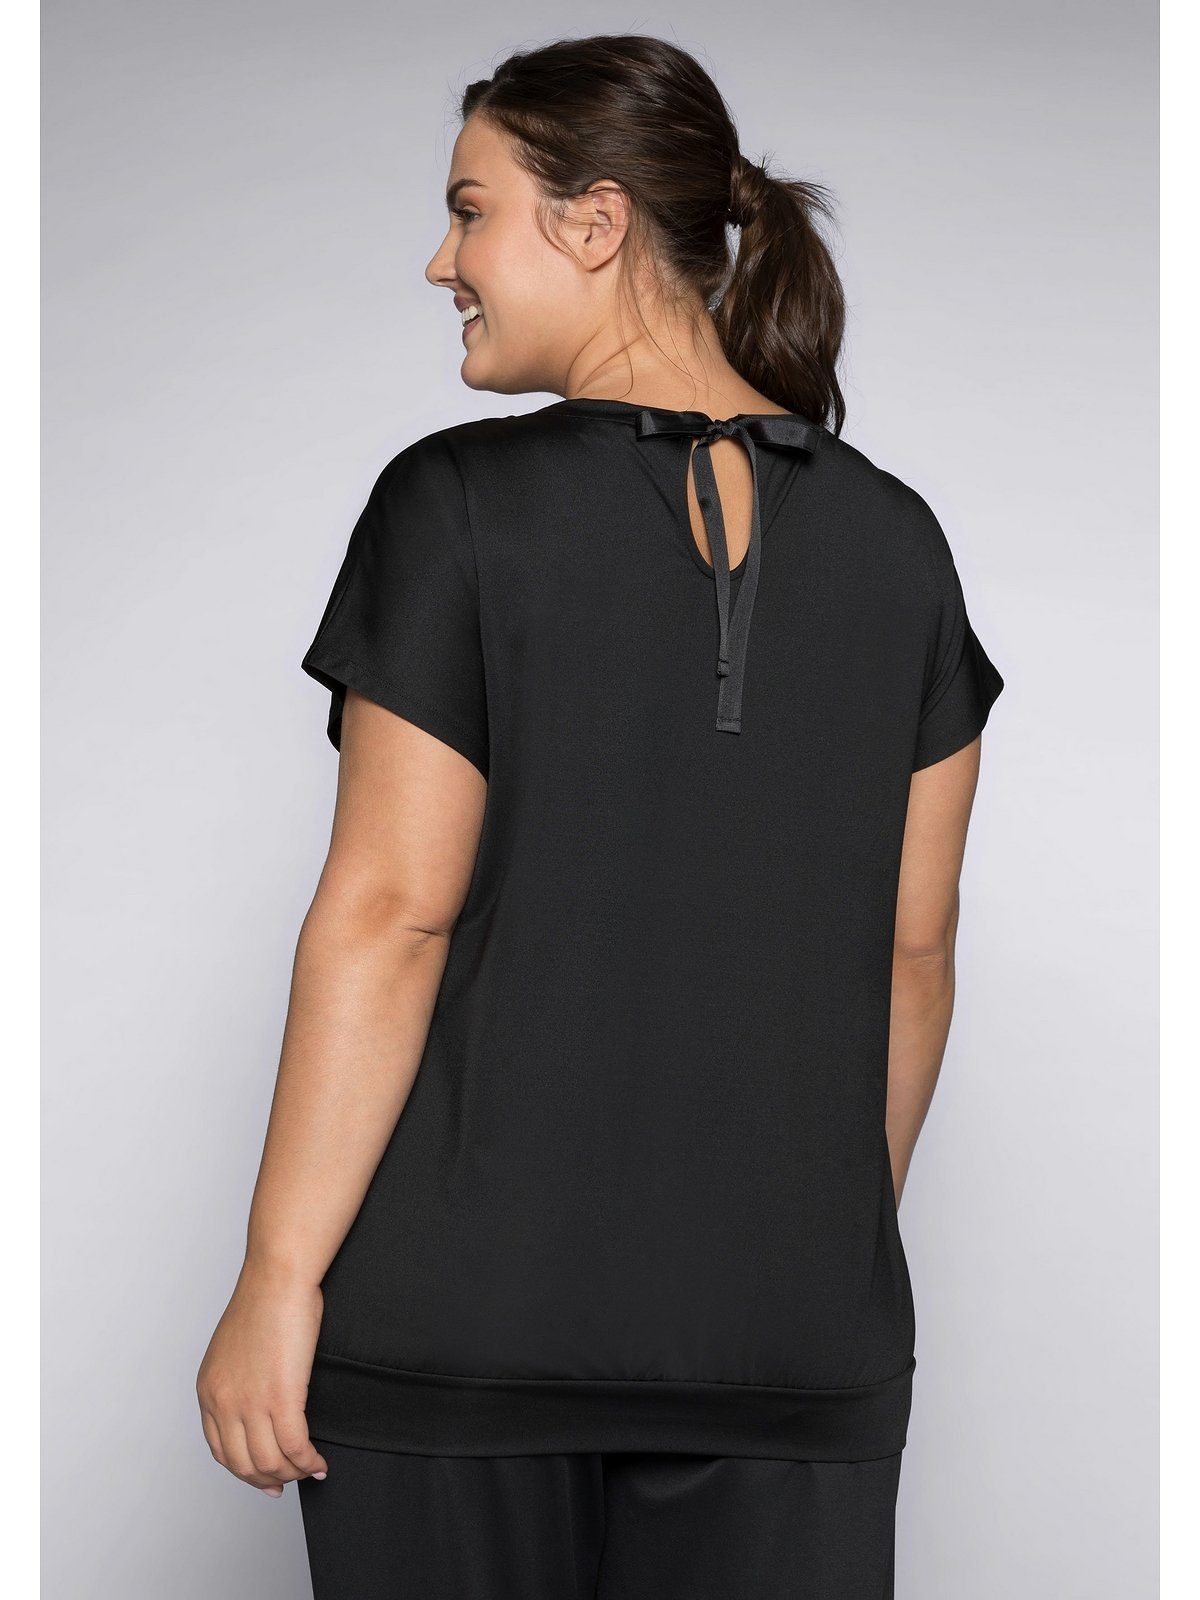 Sheego T-Shirt Große Größen aus Funktionsmaterial schwarz